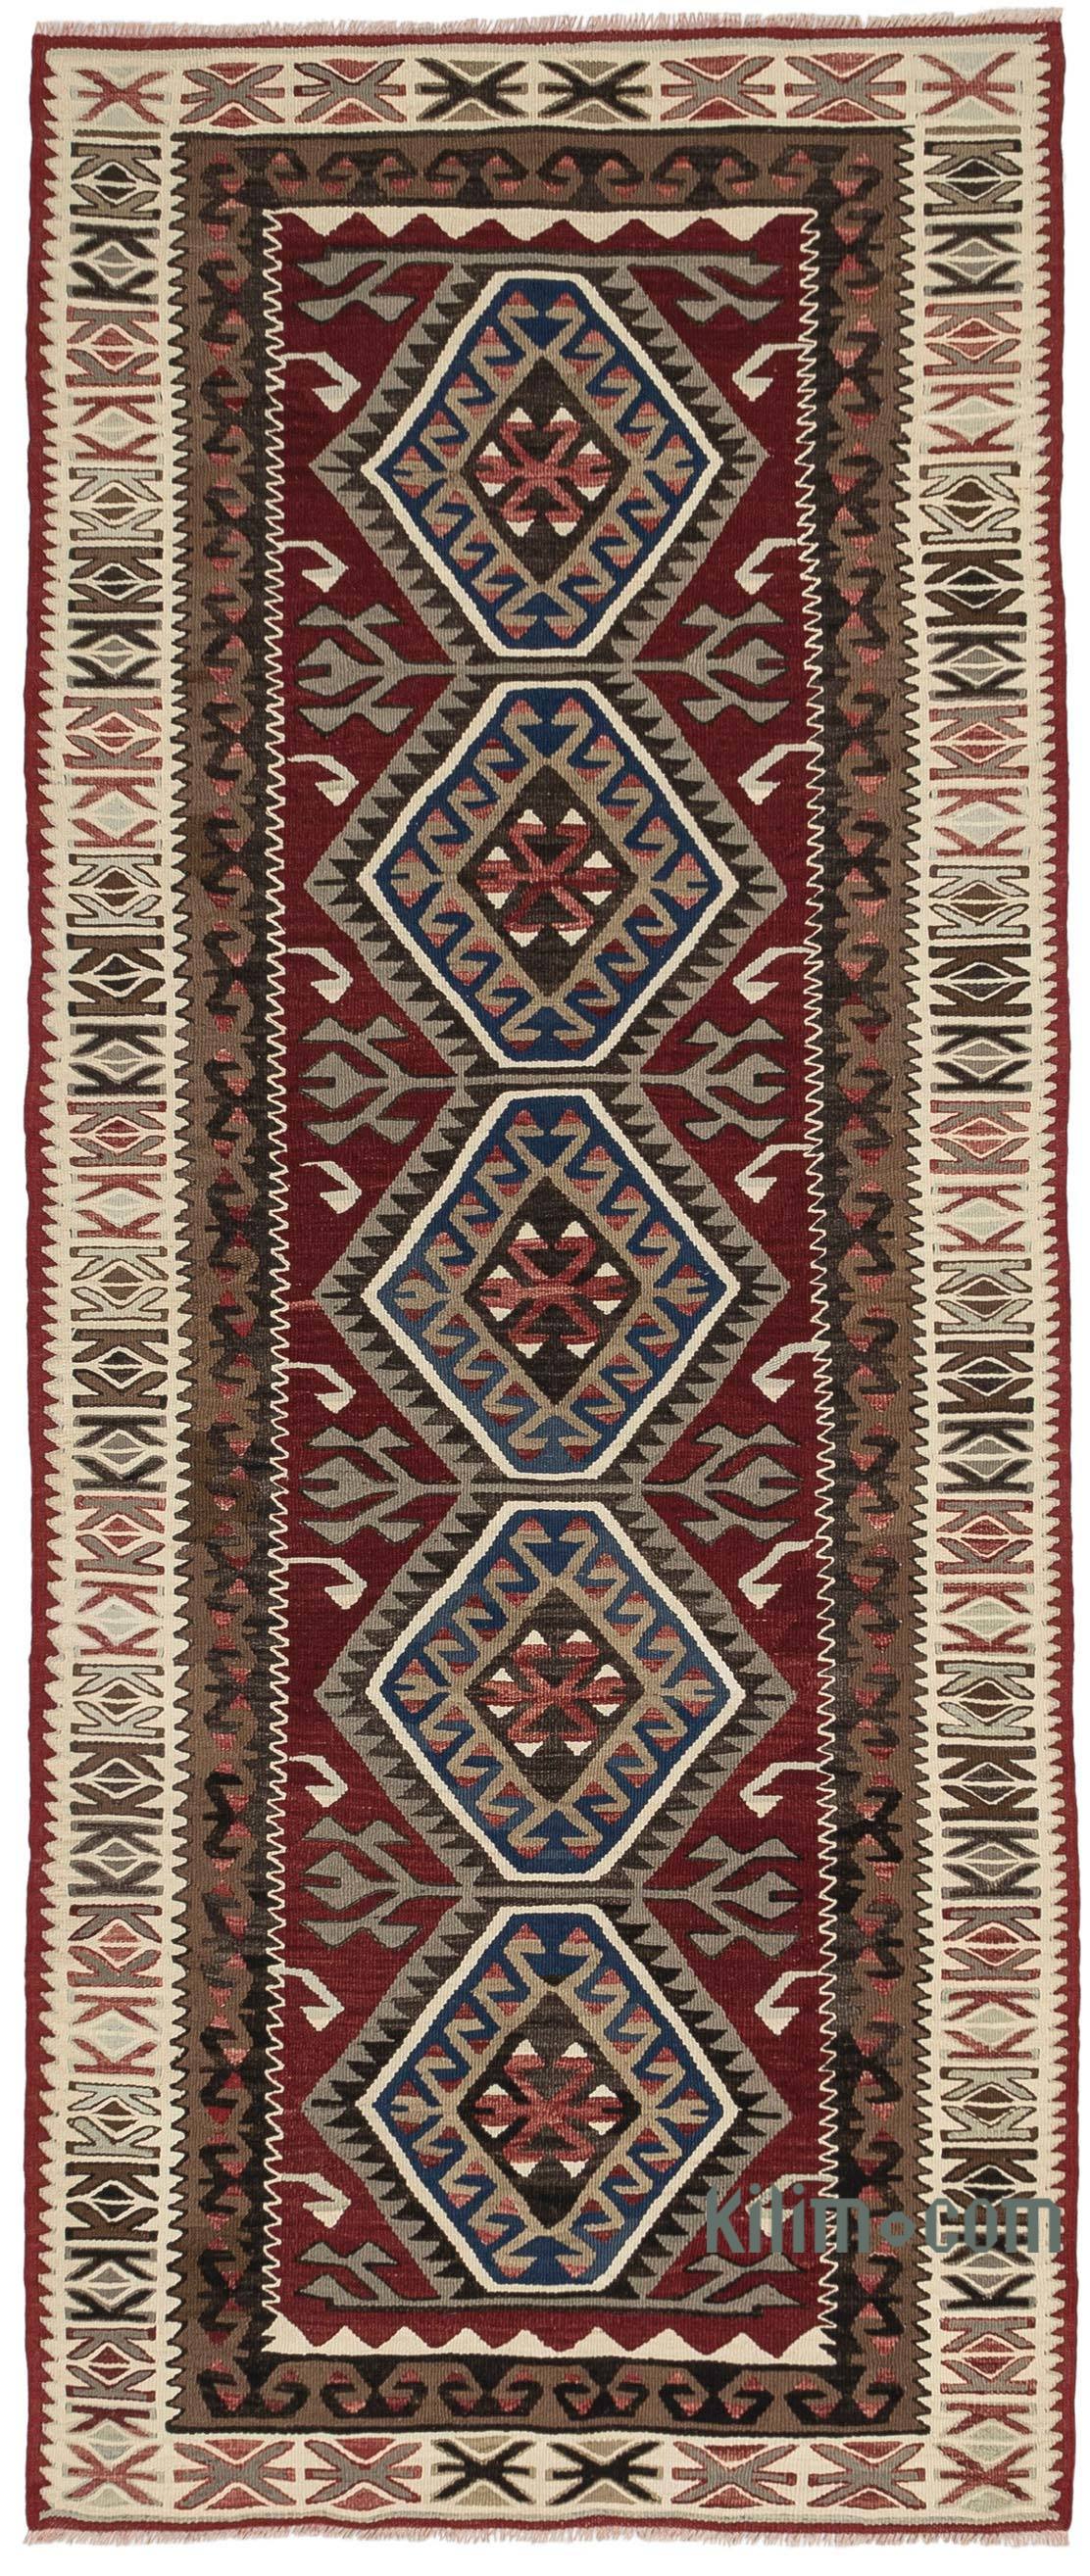 K0067017 Vintage Adana Kilim Rug - 3' 2 x 7' 5 (38 x 89)